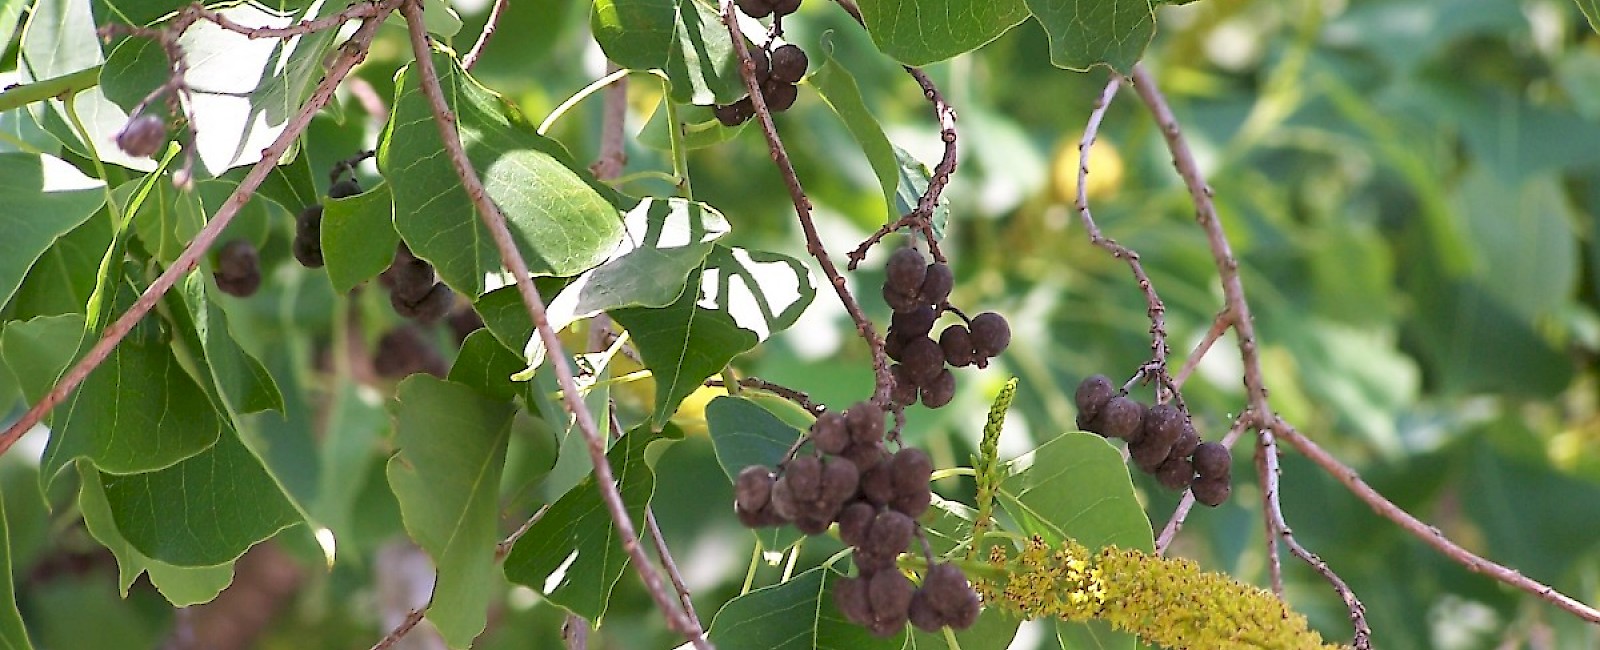 [*Triadica sebifera*](/assessments/sapium-sebiferum/), Chinese tallowtree — [Wikimedia Commons](http://commons.wikimedia.org/wiki/File:ChineseTallowSeedpods.jpg)